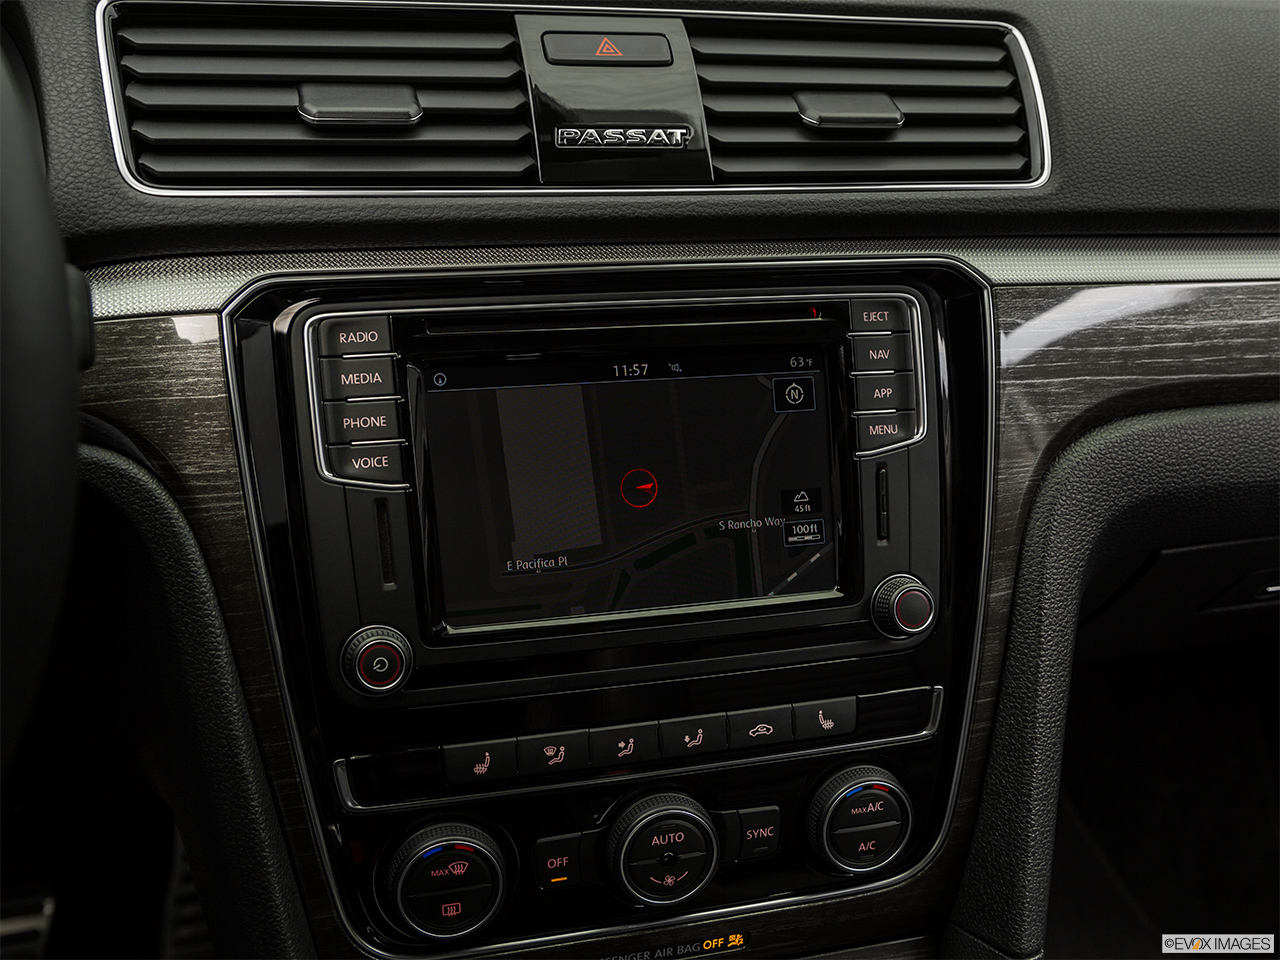 2018 Volkswagen Passat 2.0T SEL Premium Driver position view of navigation system. 